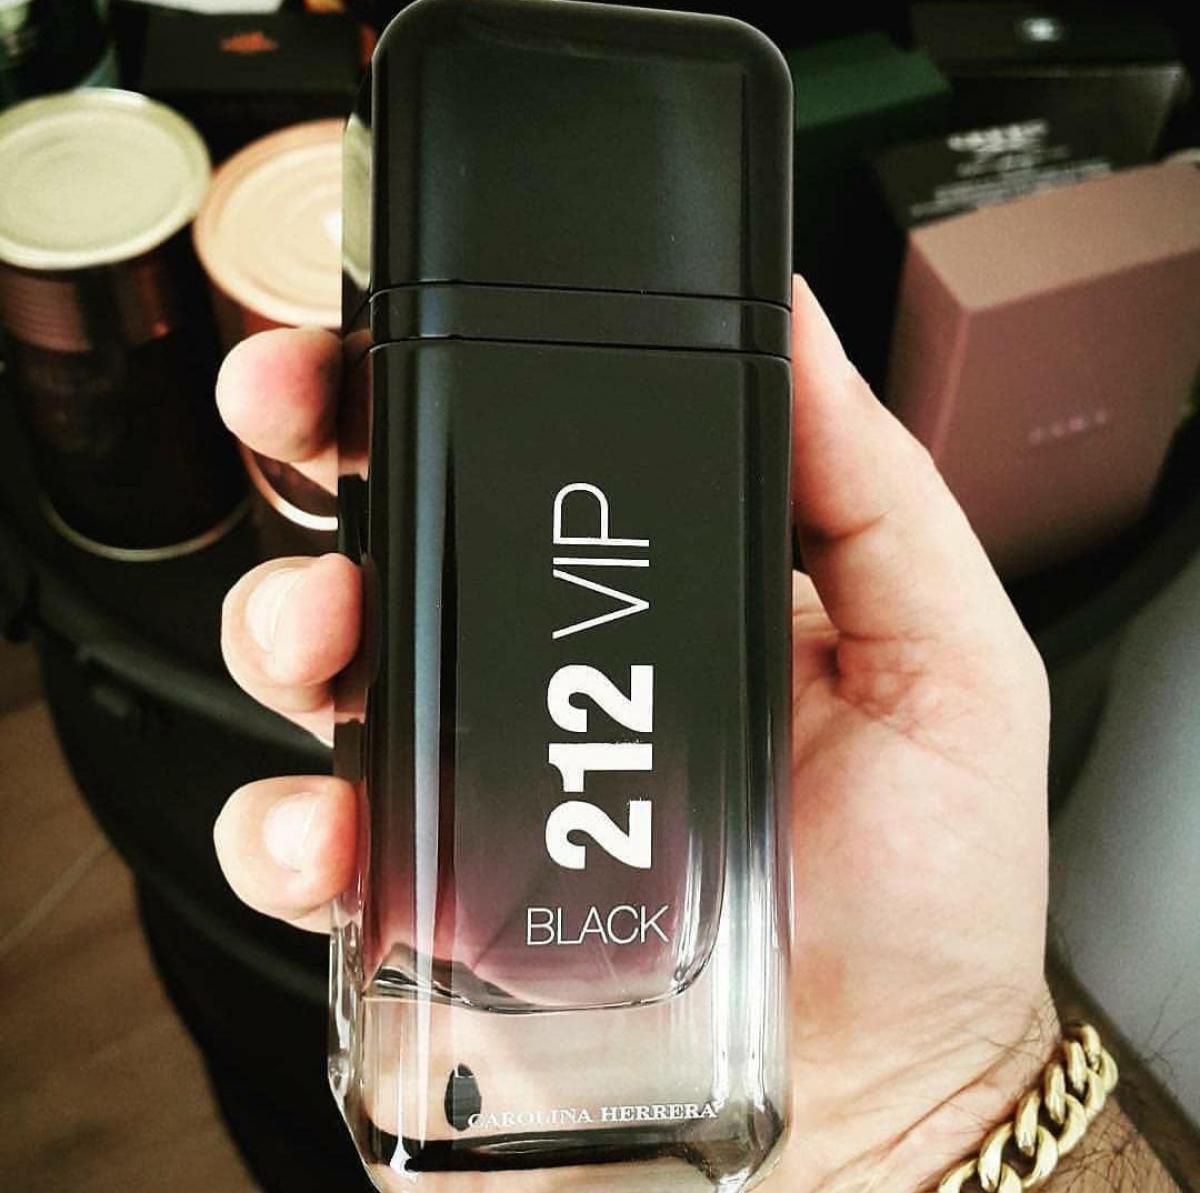 212 VIP Black Carolina Herrera cologne - a fragrance for men 2017